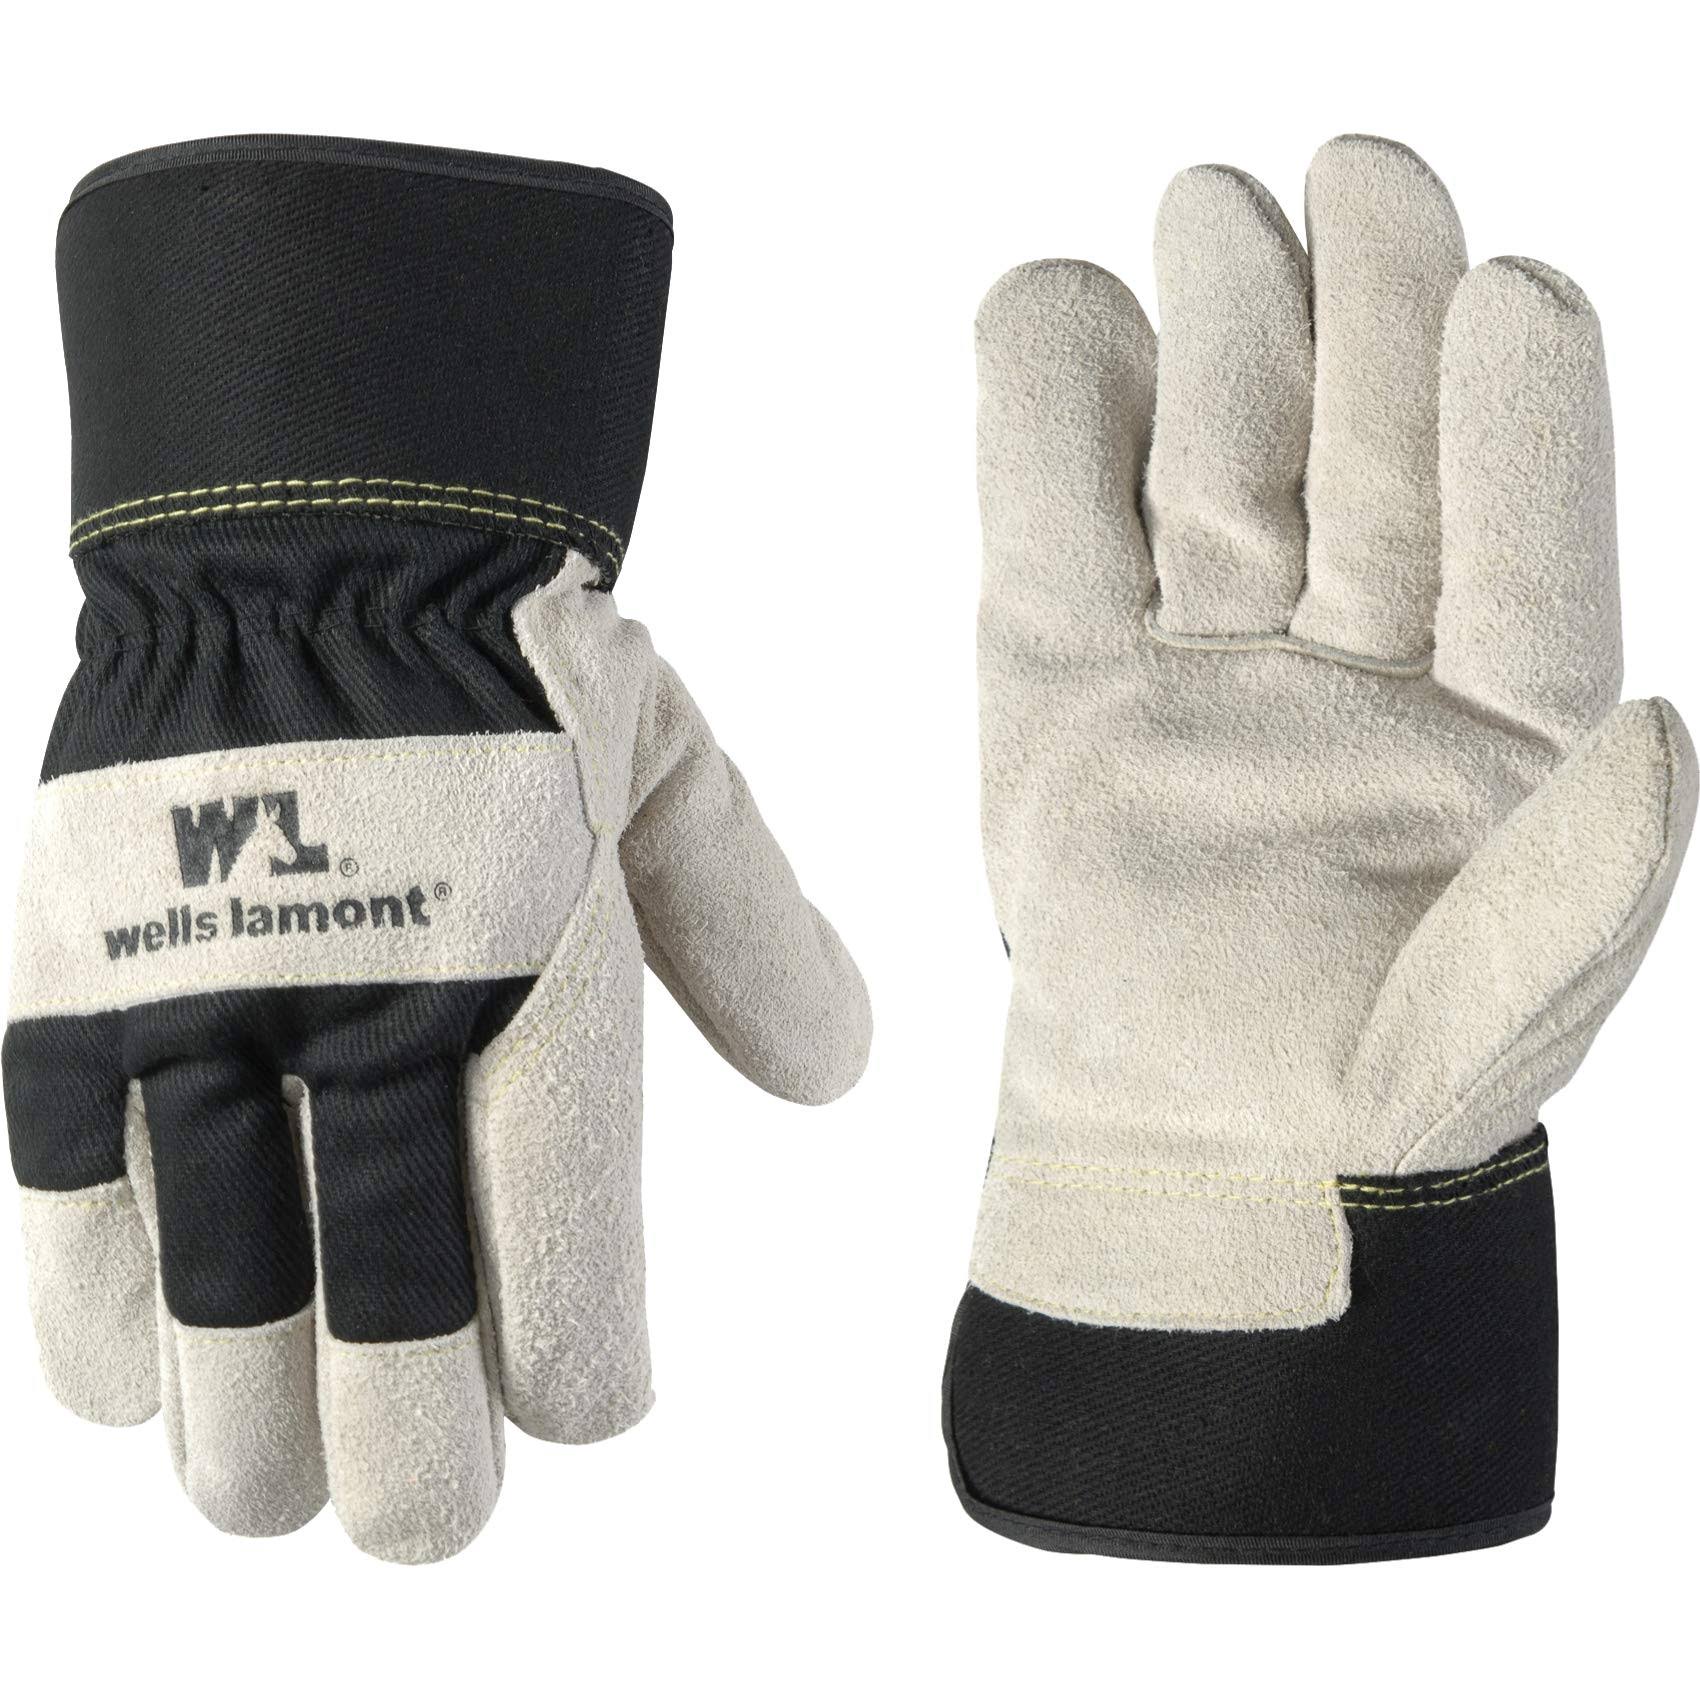 Wells Lamont Leather Work Gloves - Medium